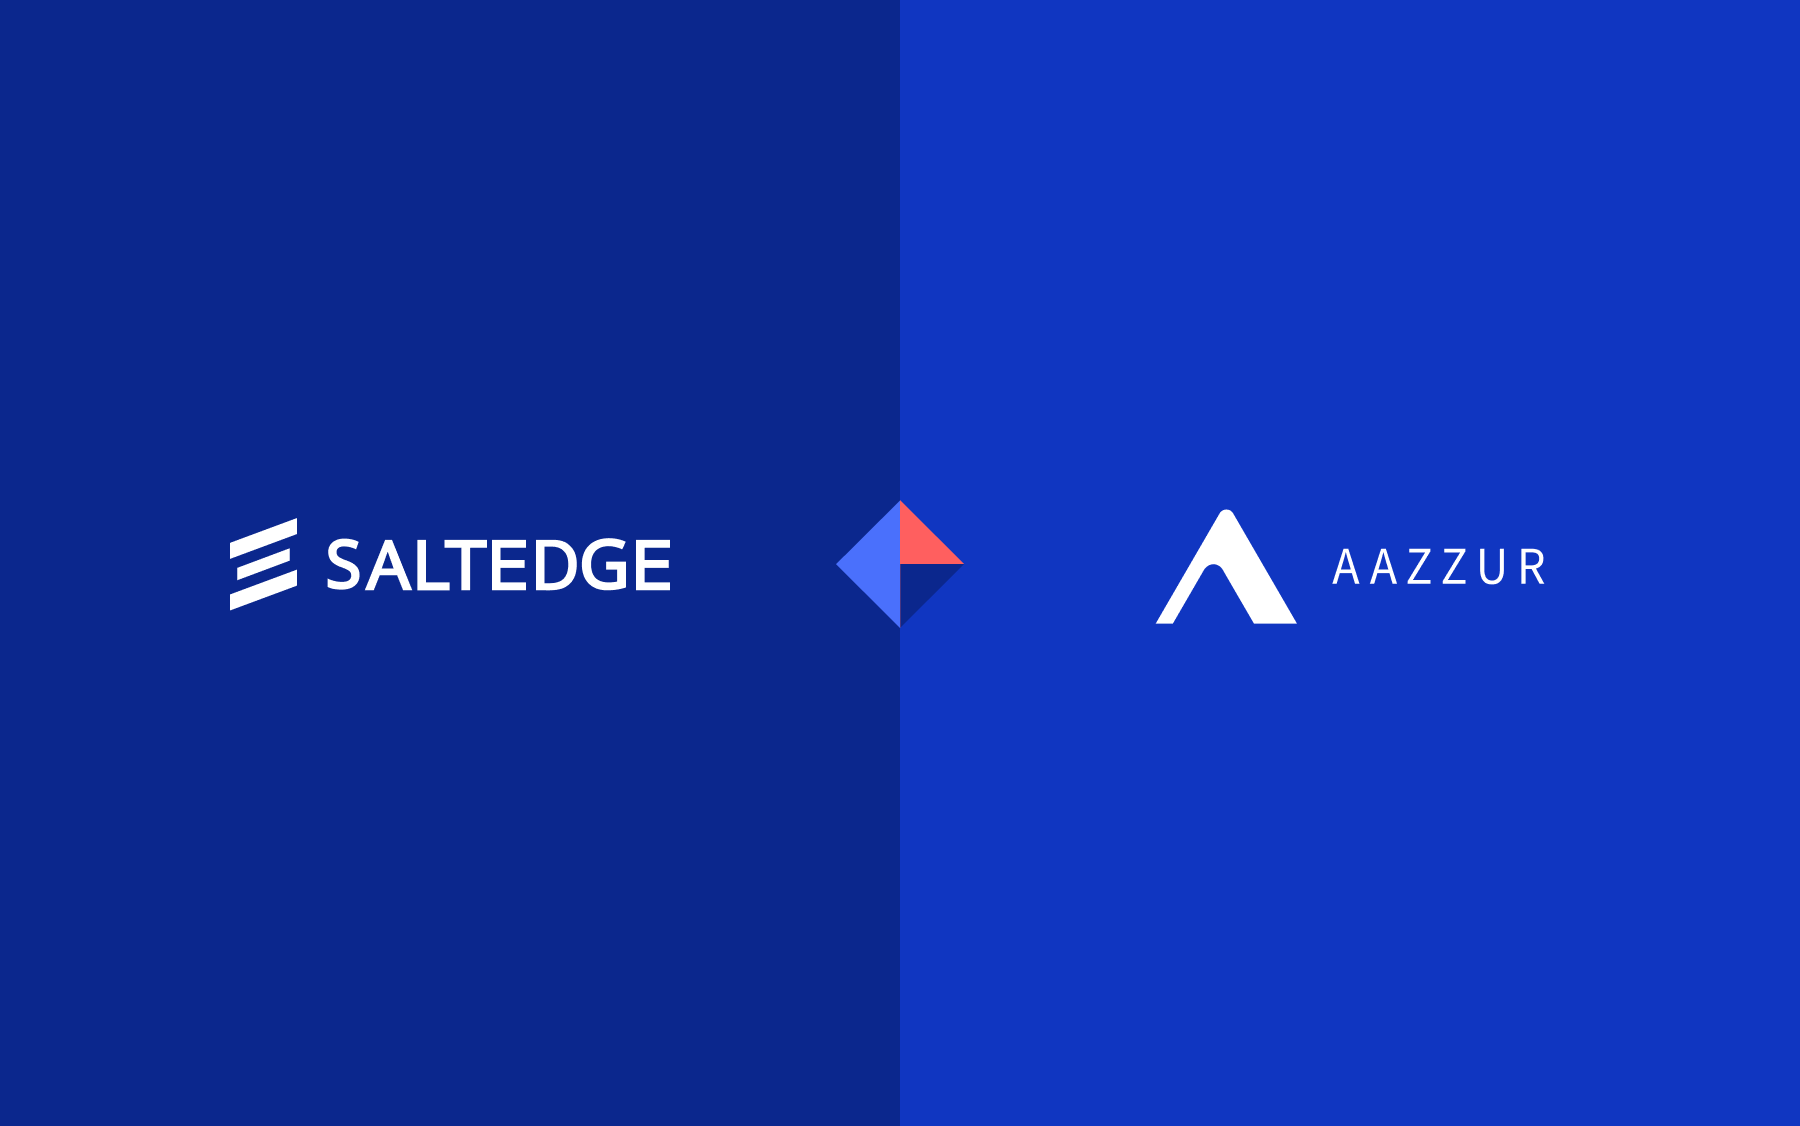 AAZZUR Partners with Open Banking Platform Salt Edge